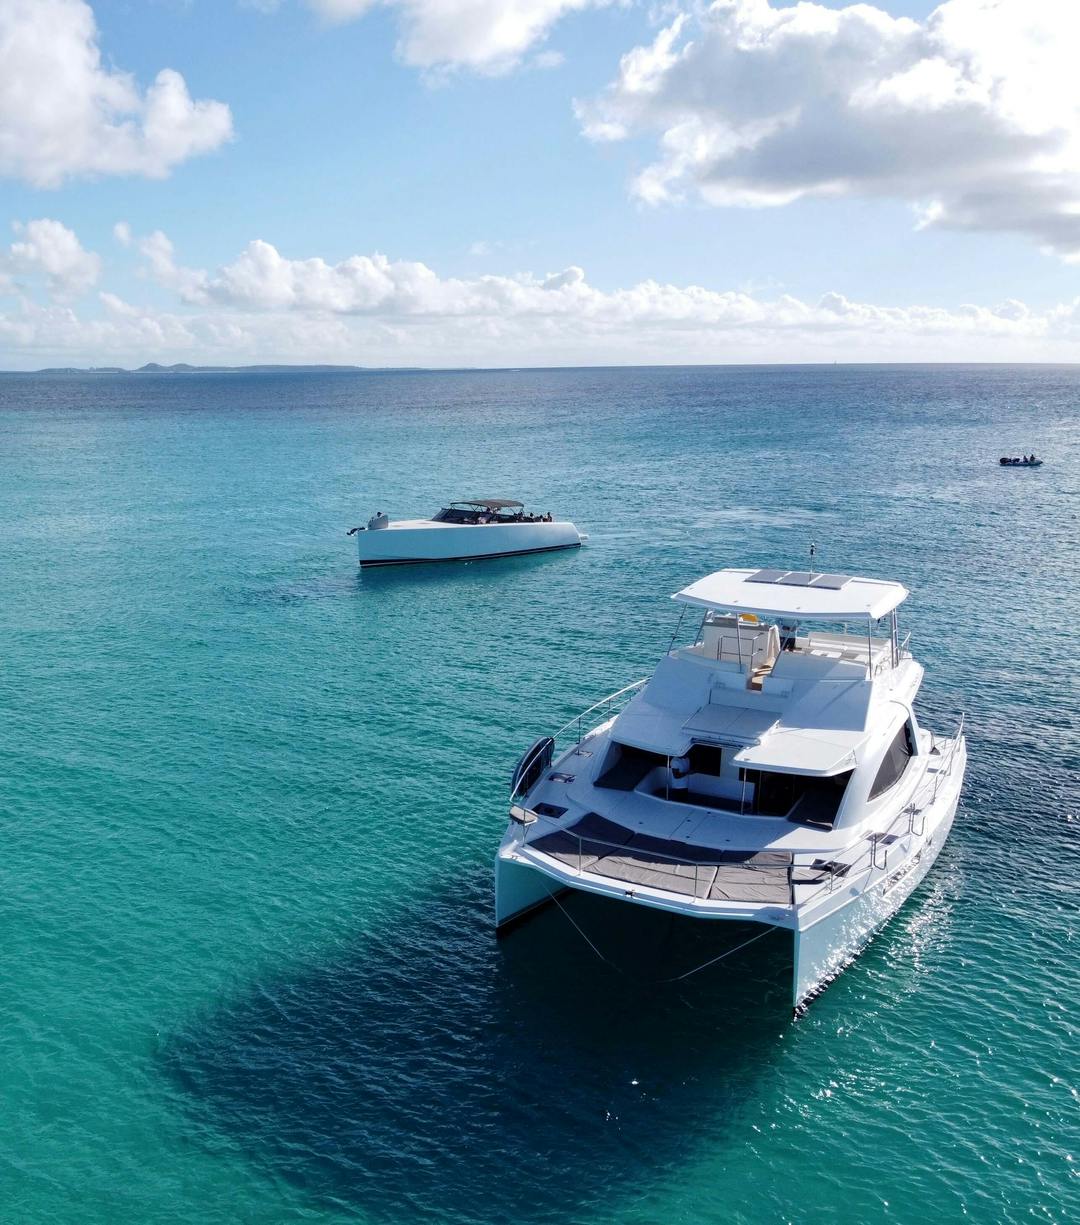 51 Leopard luxury charter yacht - Saint Martin